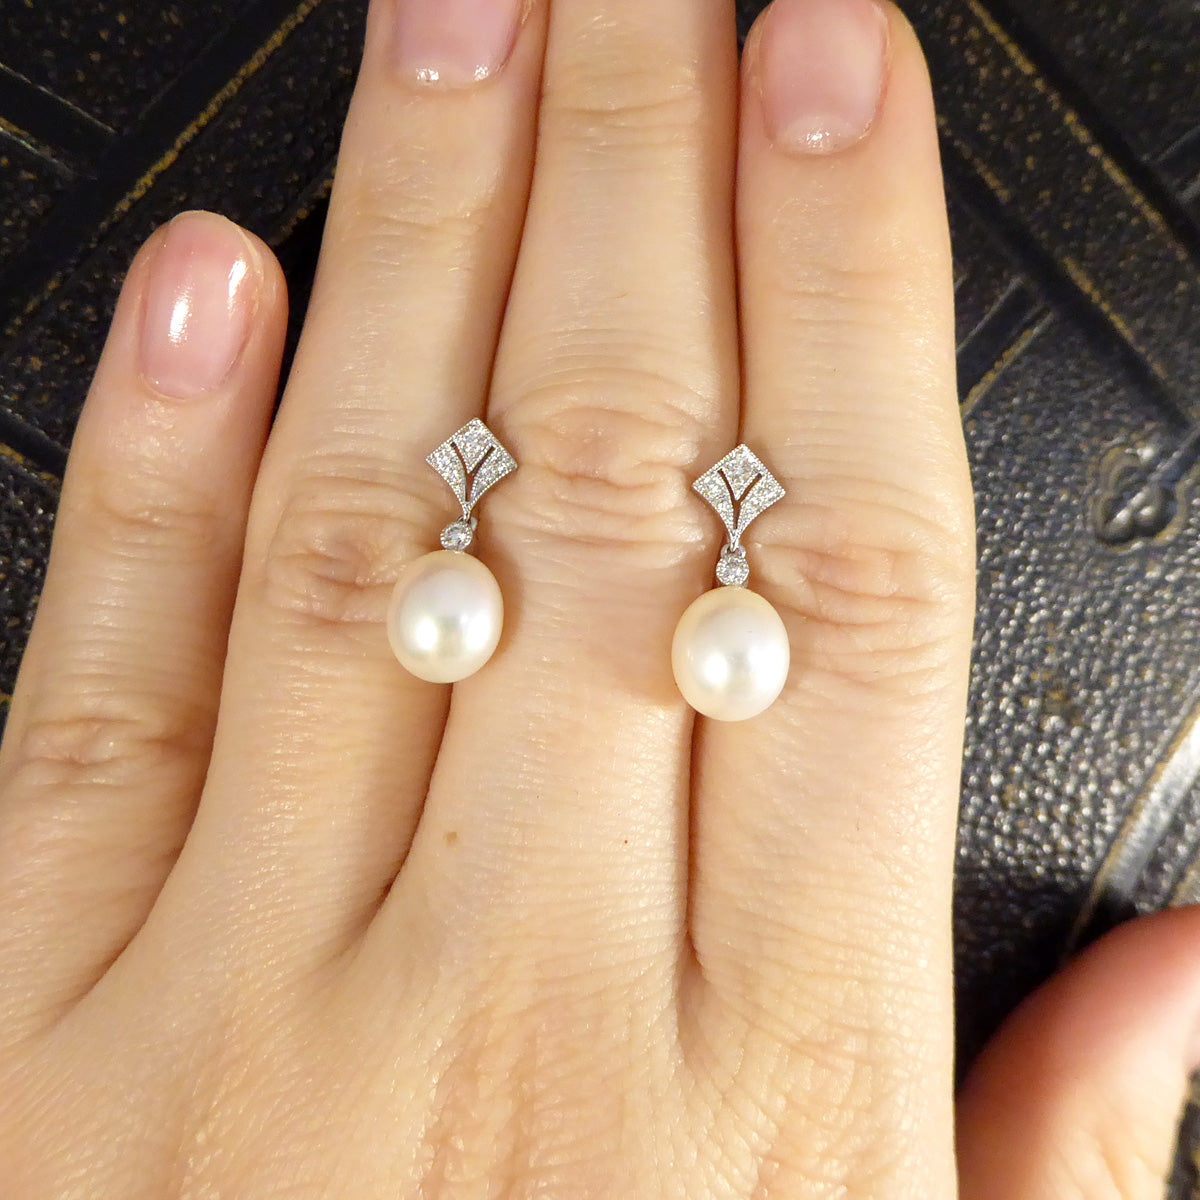 Art Deco Period Replica Diamond Set Pearl Drop Earrings in 18ct White Gold